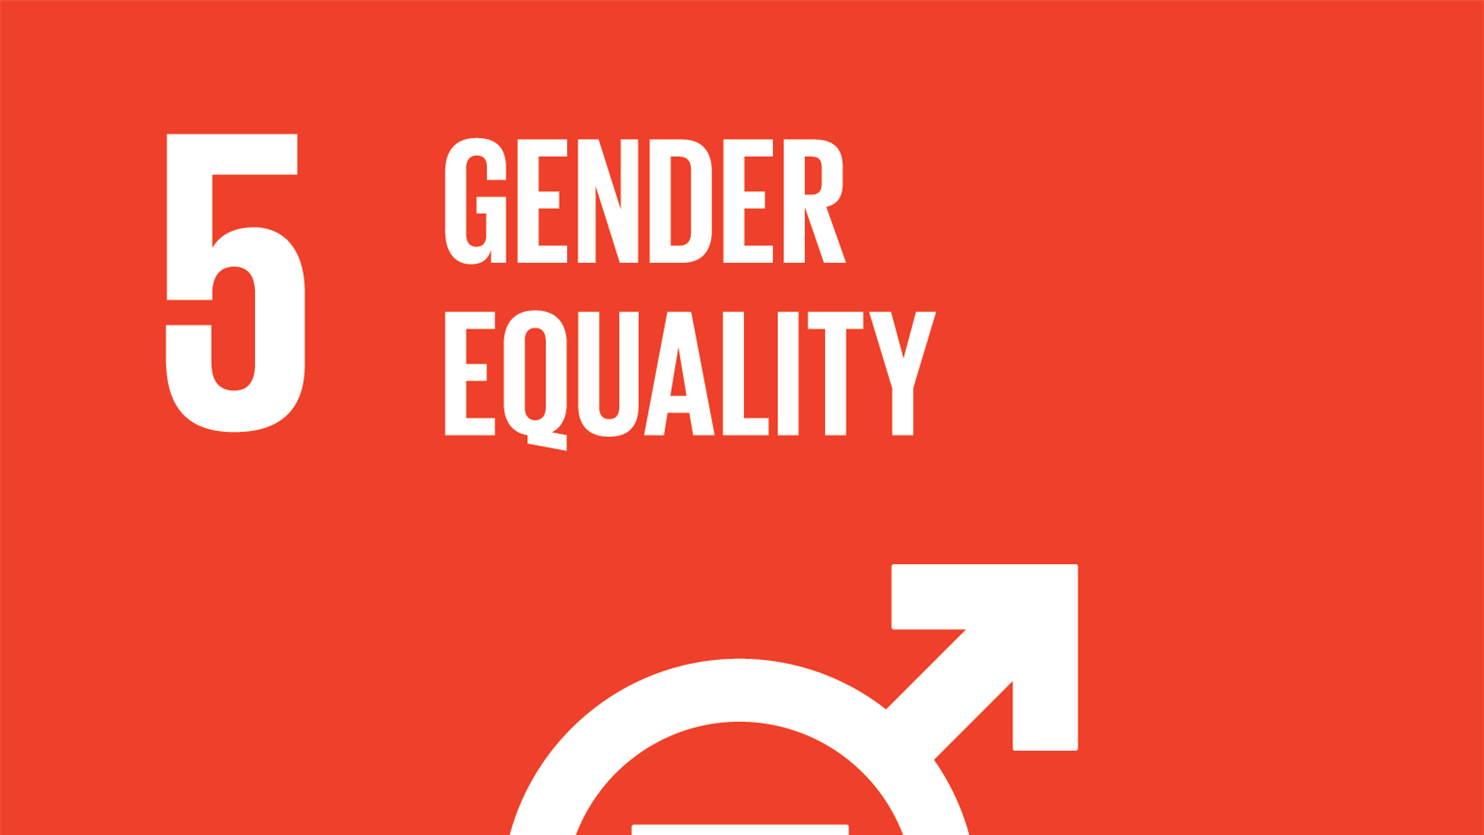 Sustainability goal 5: Gender Equality